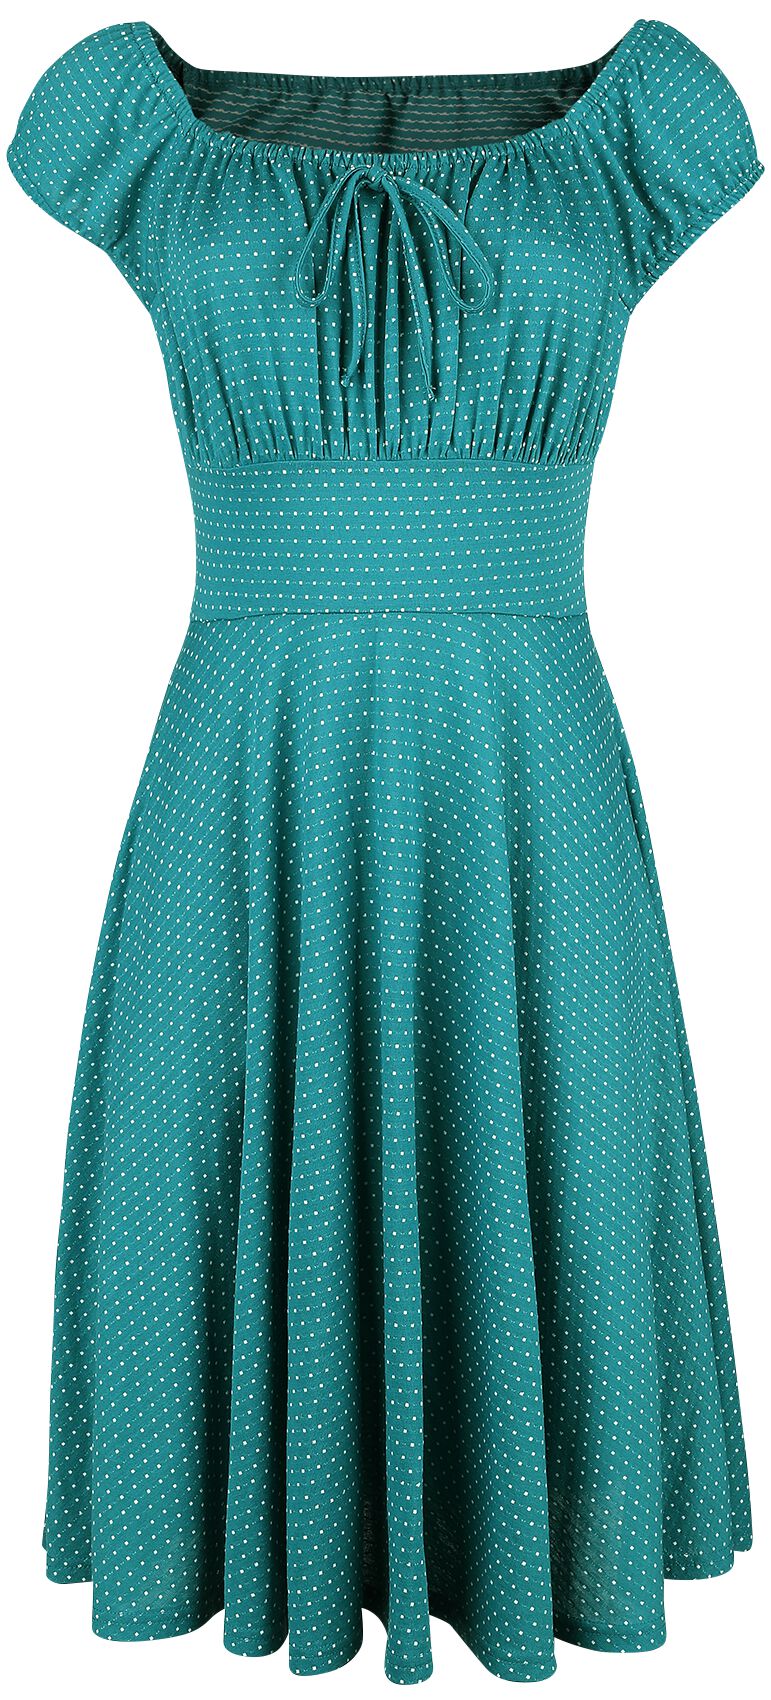 Voodoo Vixen - Rockabilly Kleid knielang - Tessy Green Gathered Dress - XS bis 4XL - für Damen - Größe XL - petrol